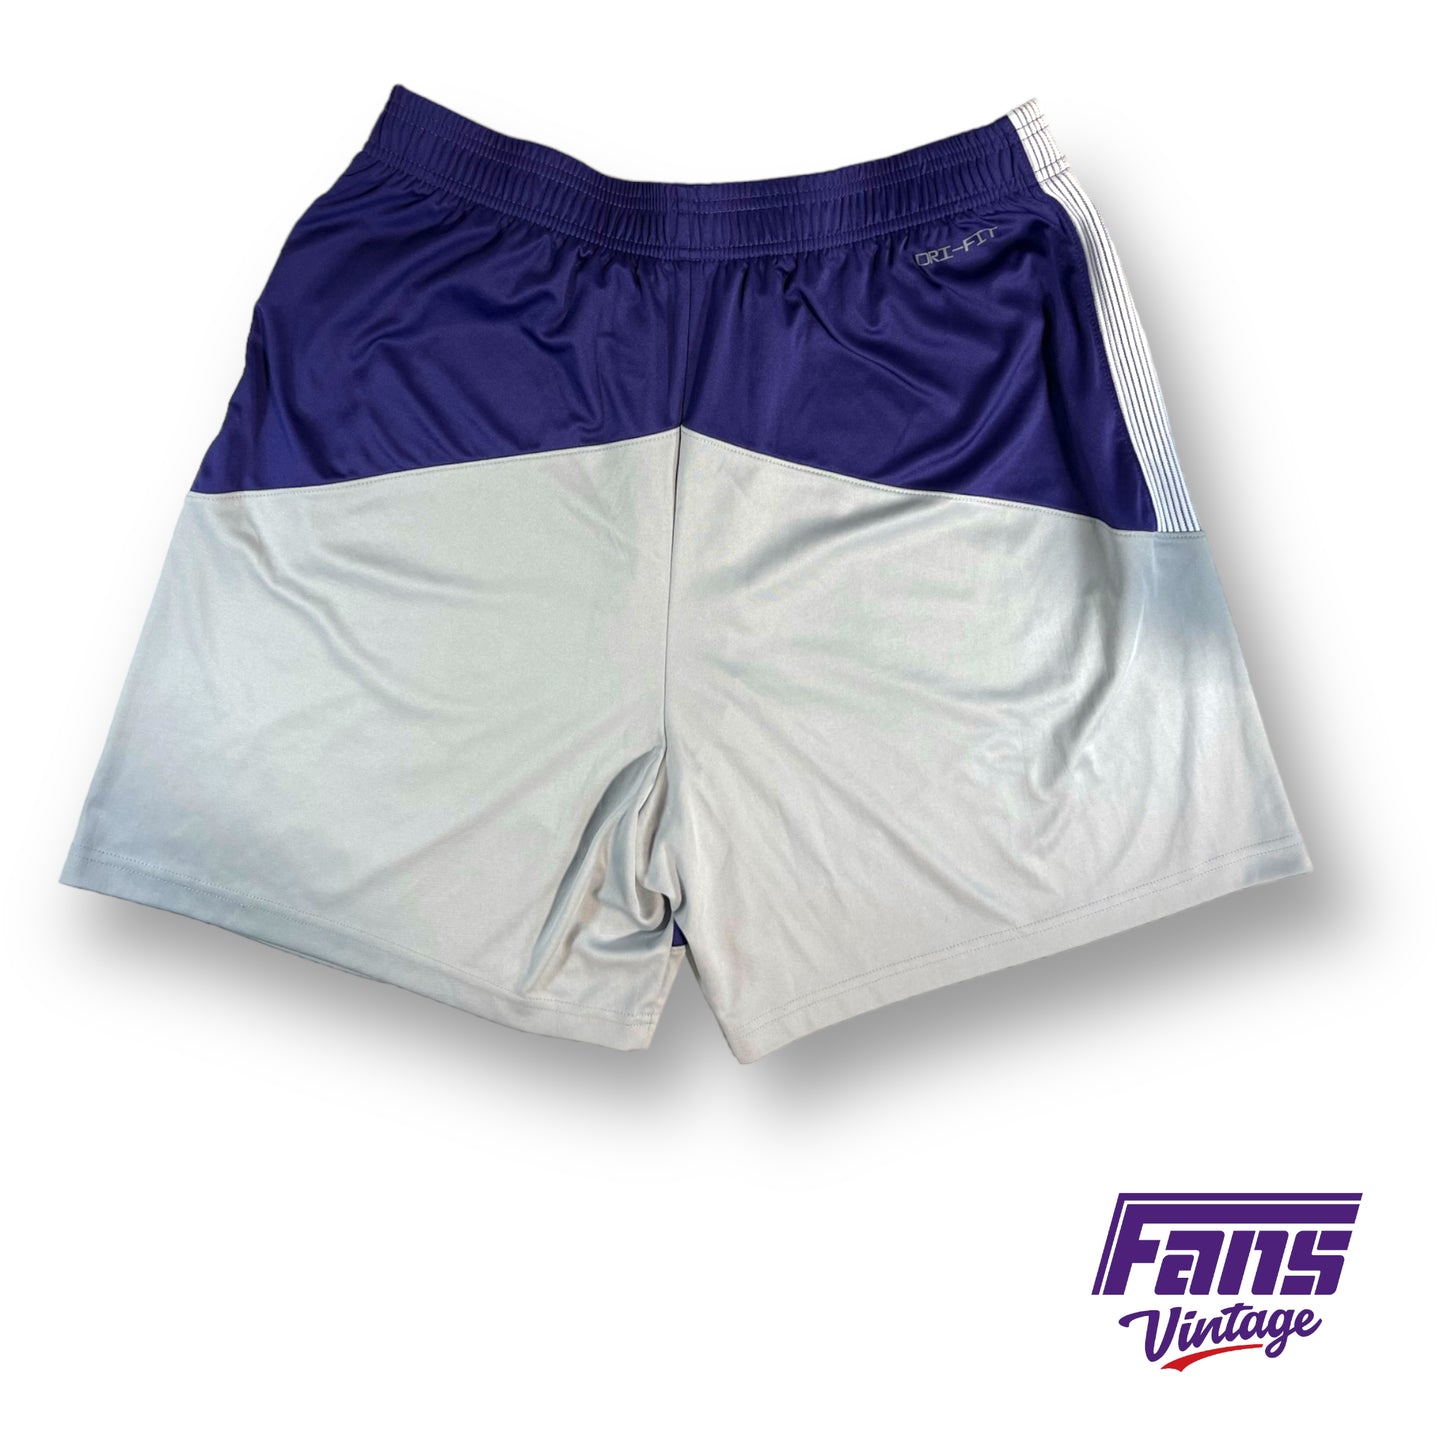 TCU team issued Premium Nike Coach's Sideline dri-fit shorts